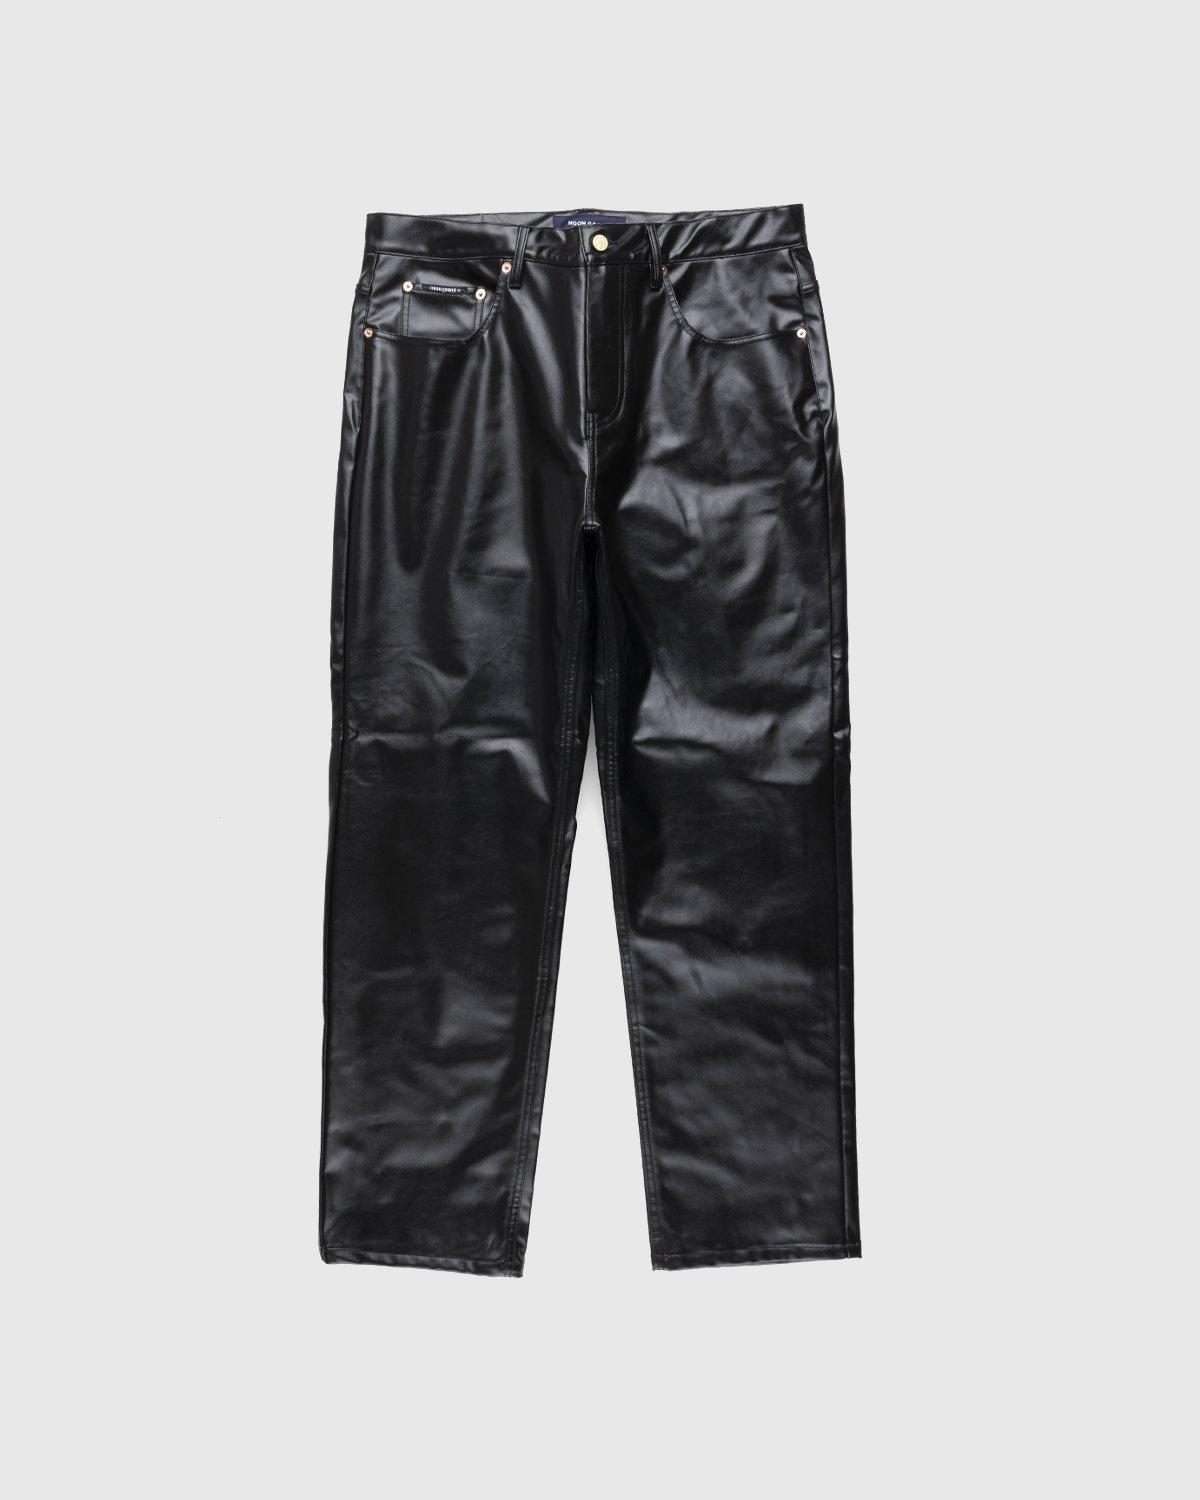 Noon Goons – Series Leather Pant Black - Leather Pants - Black - Image 1